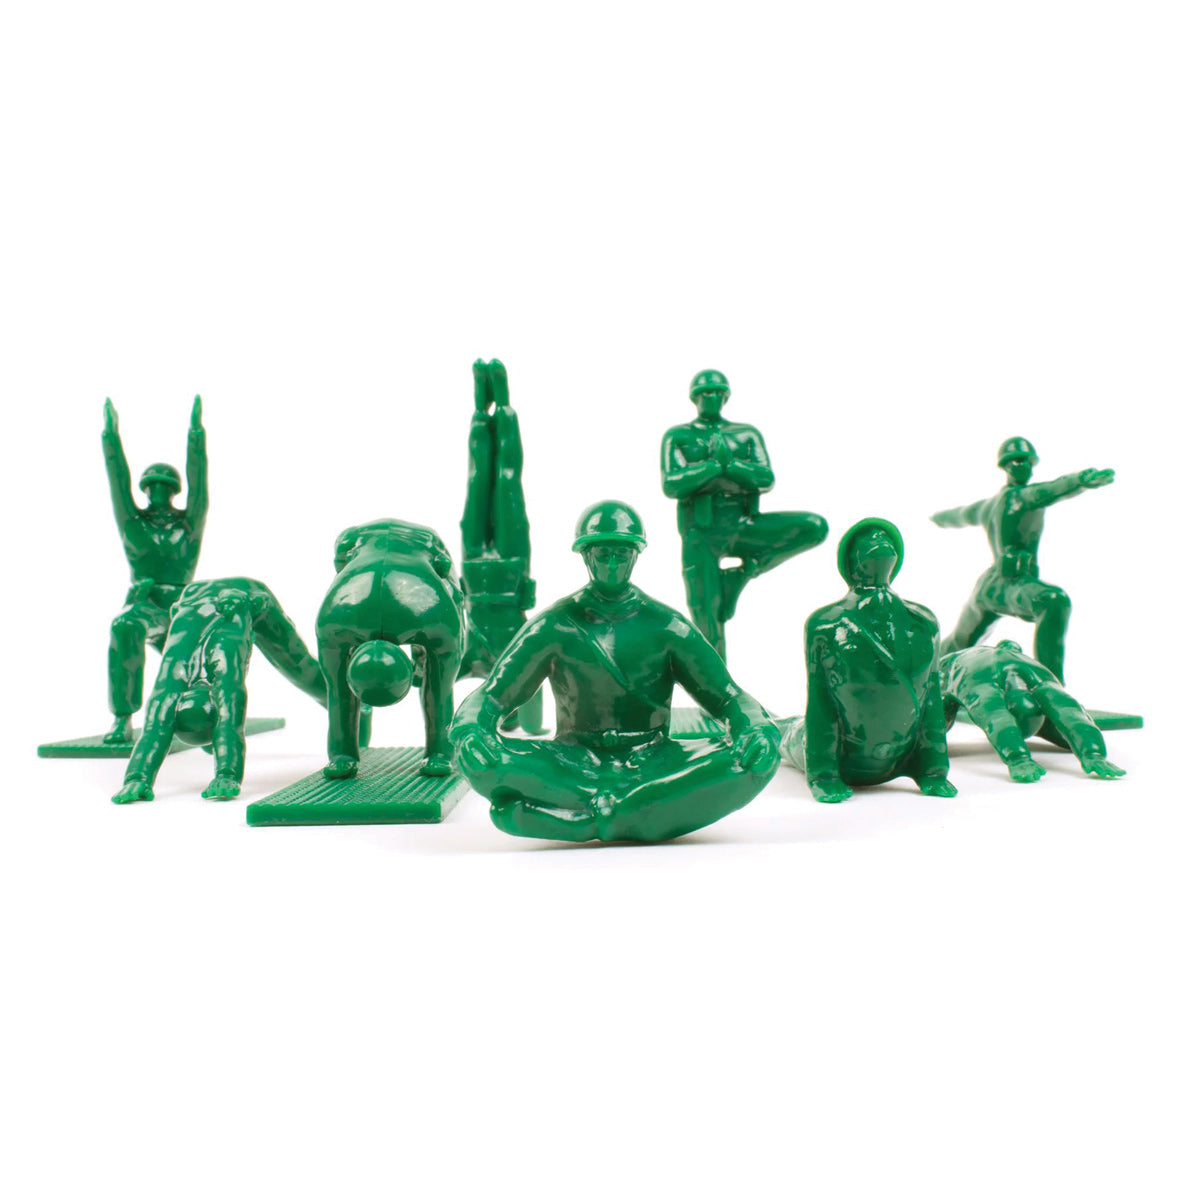 Yoga Joes Series 1 Figurines - Green